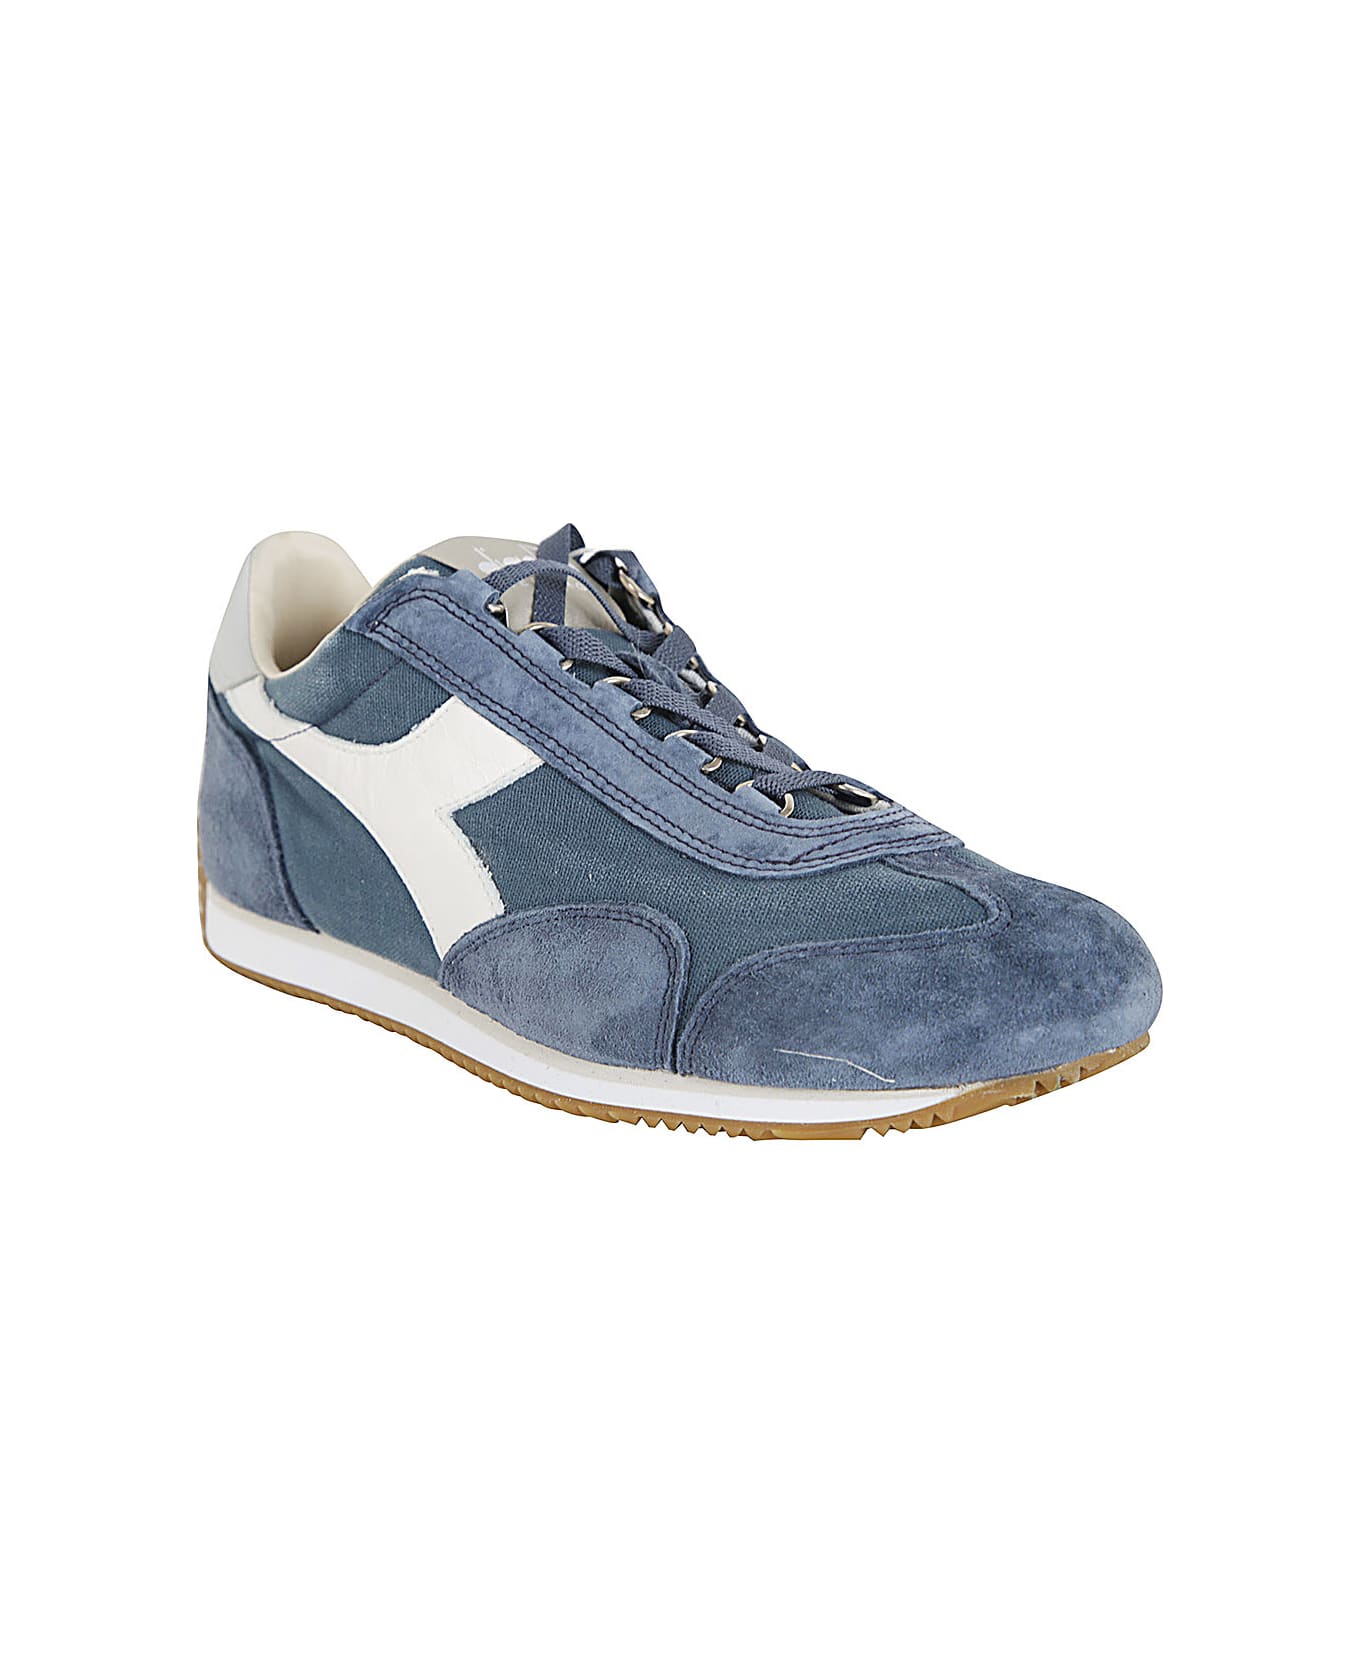 Diadora Equipe H Canvas Stone Wash Sneaker - Stellar Blue